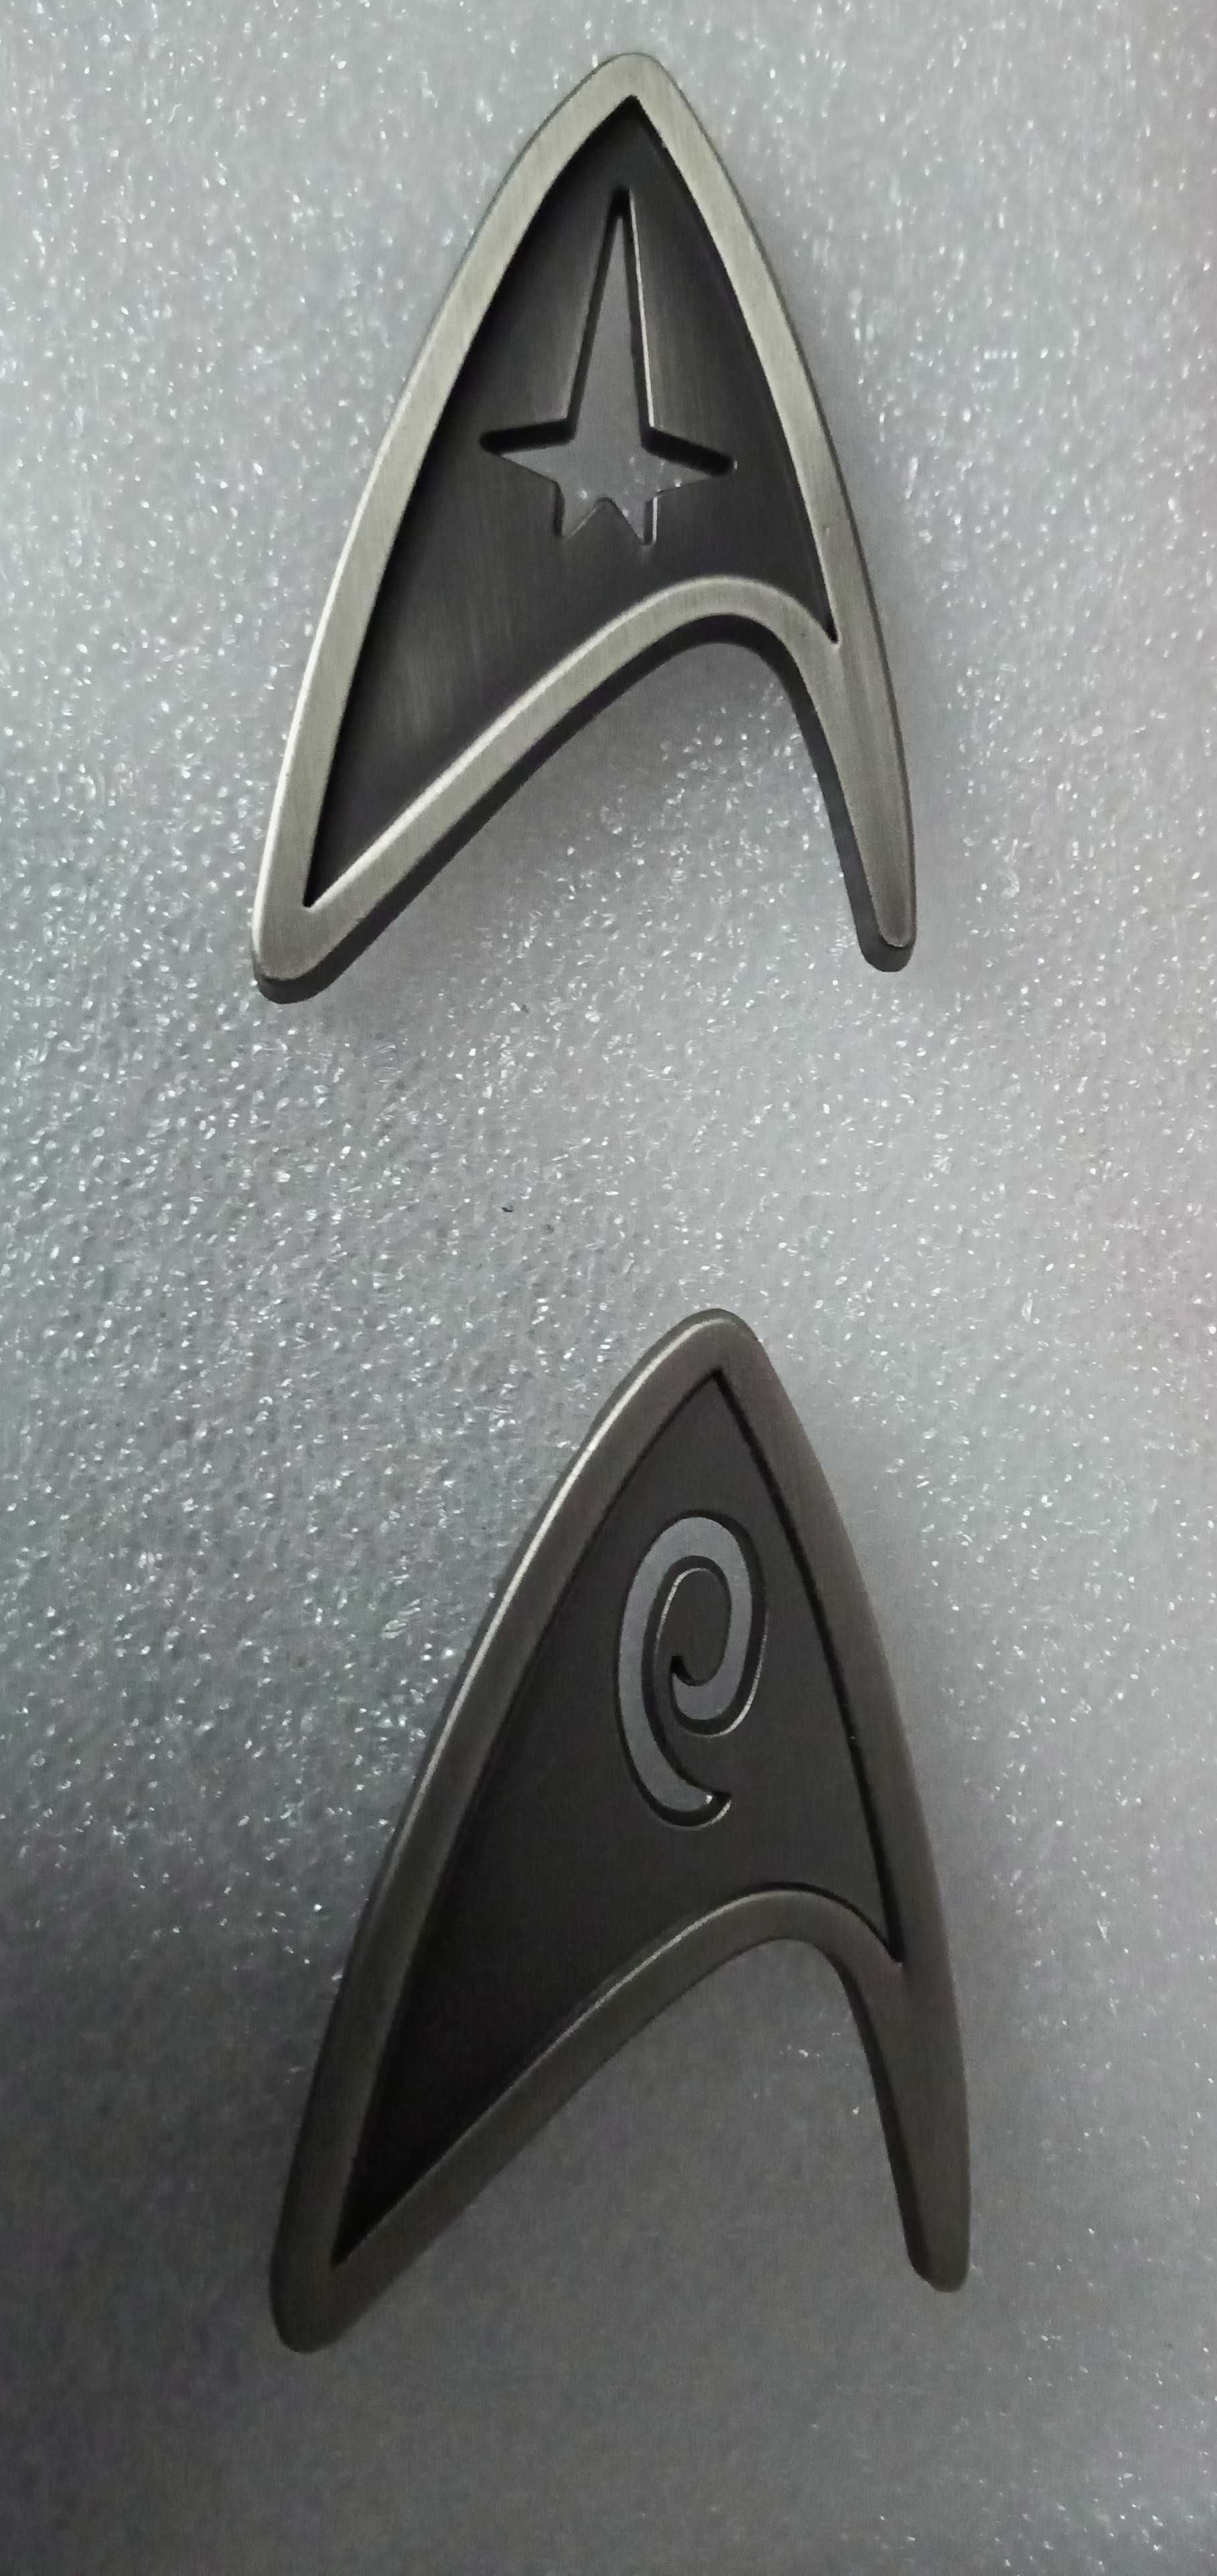 Pins Star Trek das 4 divisões -Command, Science, Medical e Engineering